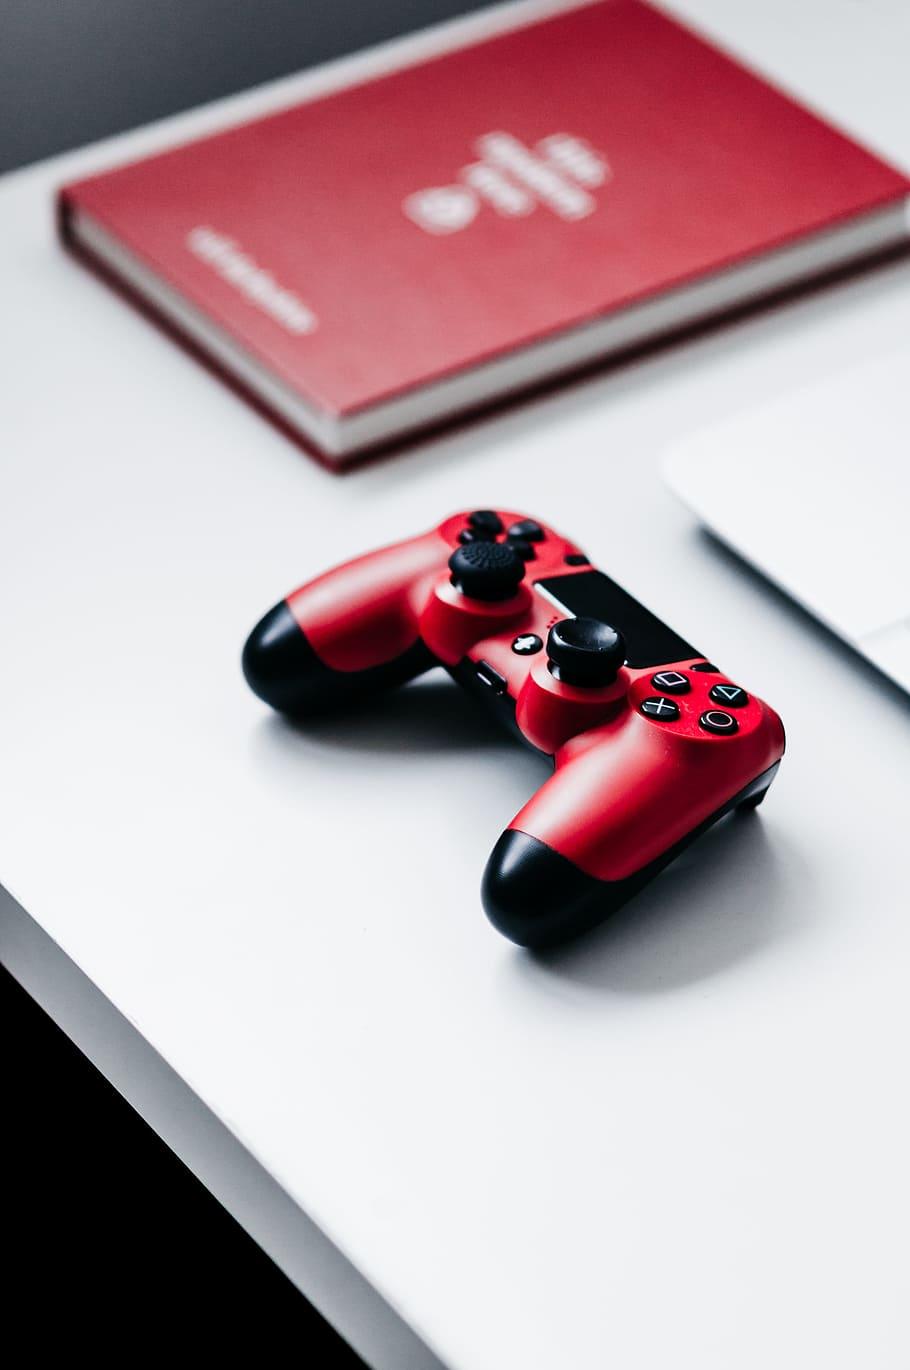 HD wallpaper: playstation gaming, desk, book, red